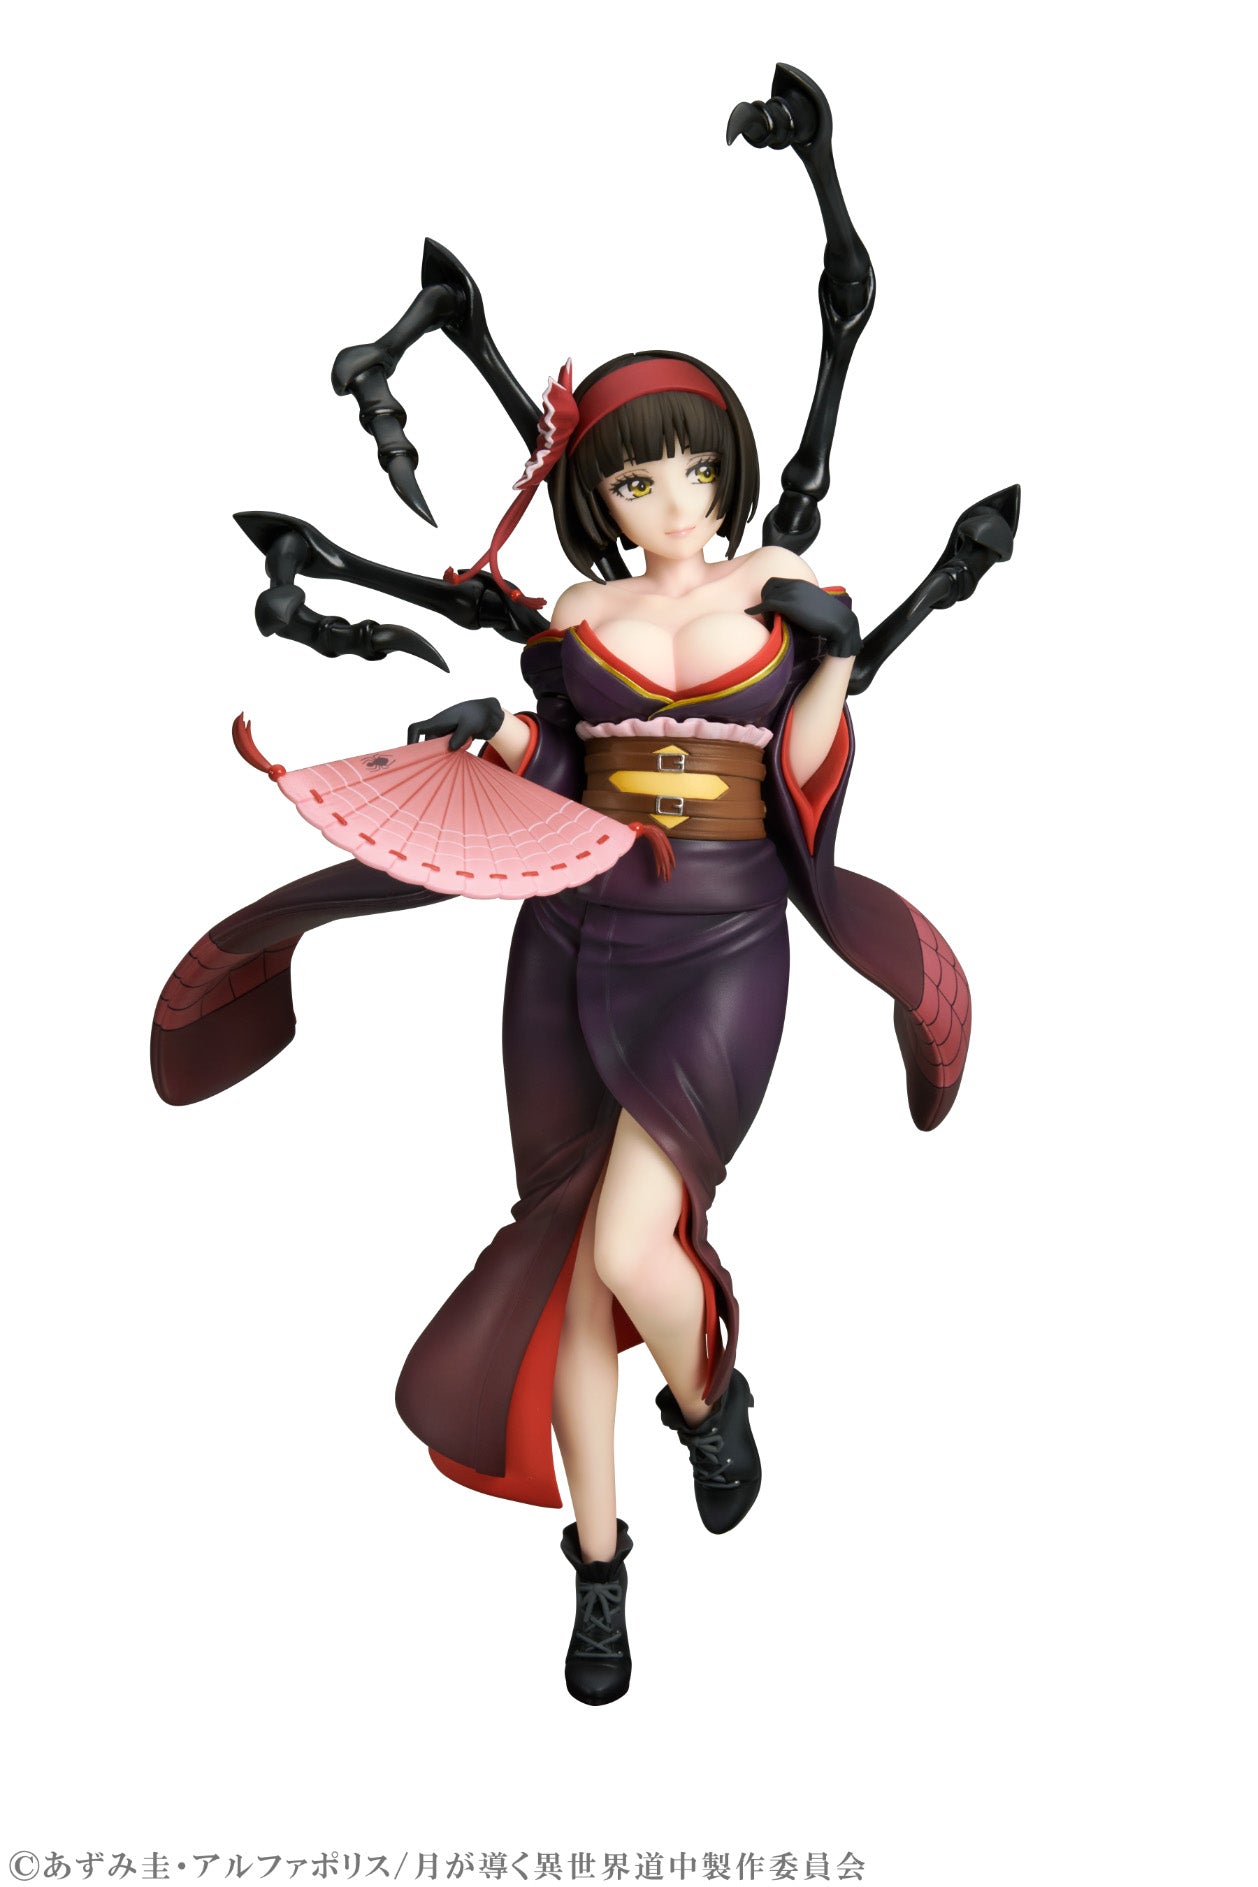 TV Anime "Tsukimichi: Moonlit Fantasy" Black Disaster Spider "Mio" 1/7 Complete Figure